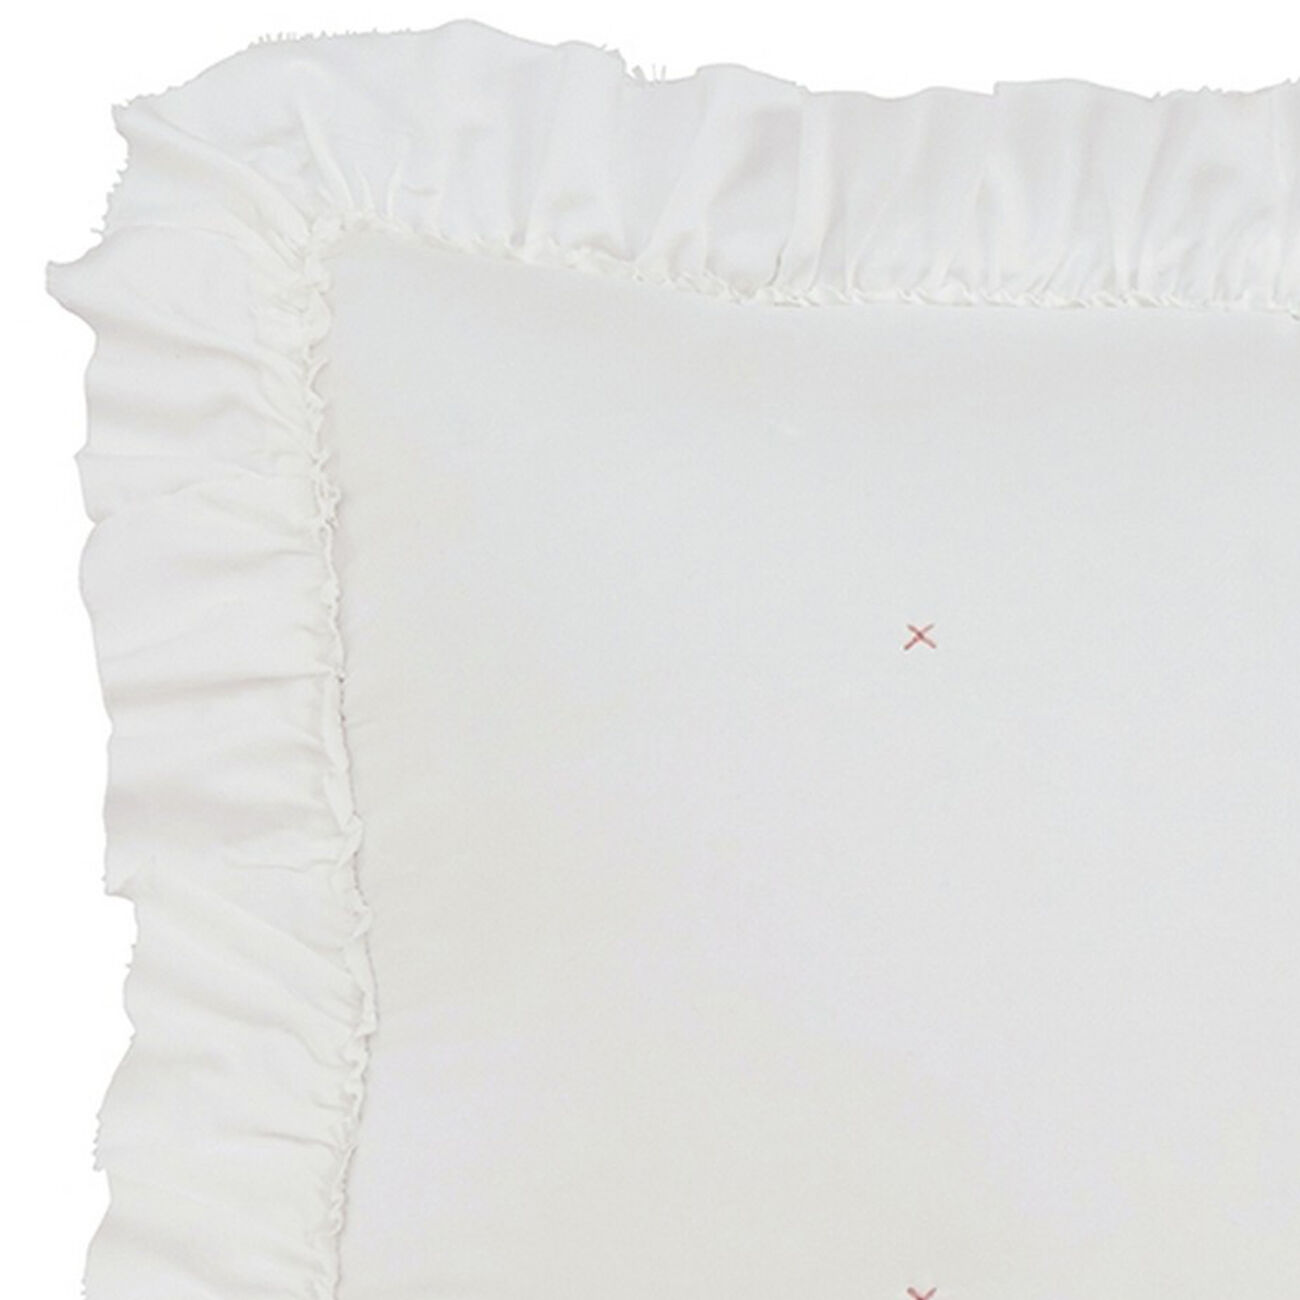 Flange Border Full Size Reversible Fabric Comforter Set with 2 Shams, White